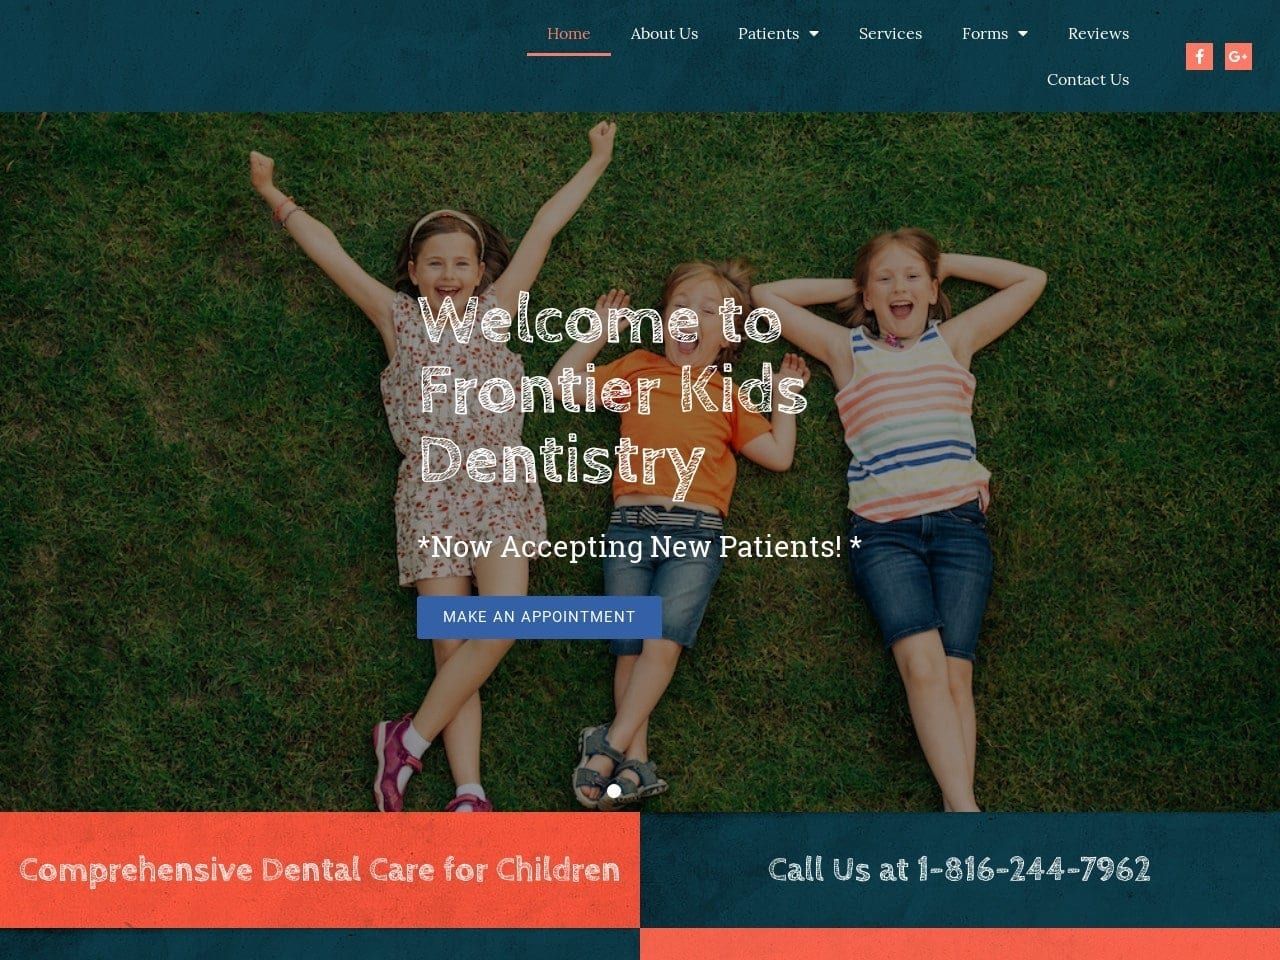 Frontier Kids Dentistry Website Screenshot From Url Frontierkidsdentistry.com